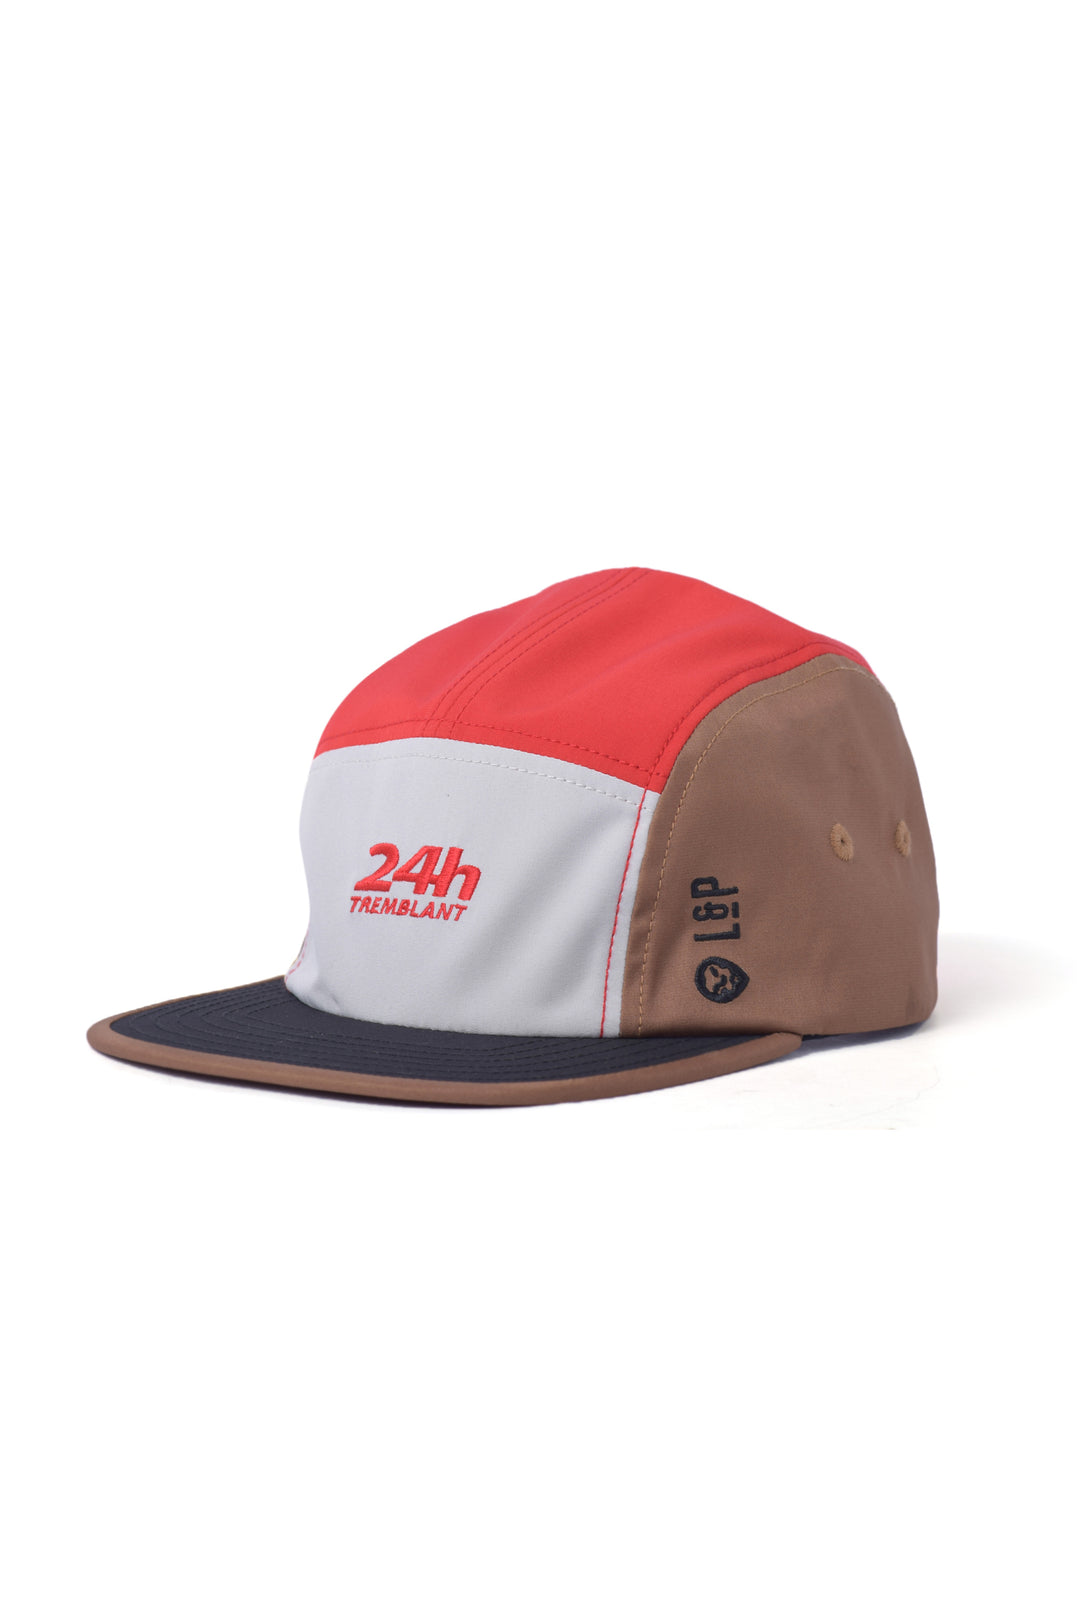 Camper hat cap (special edition 24h Tremblant 2.0)